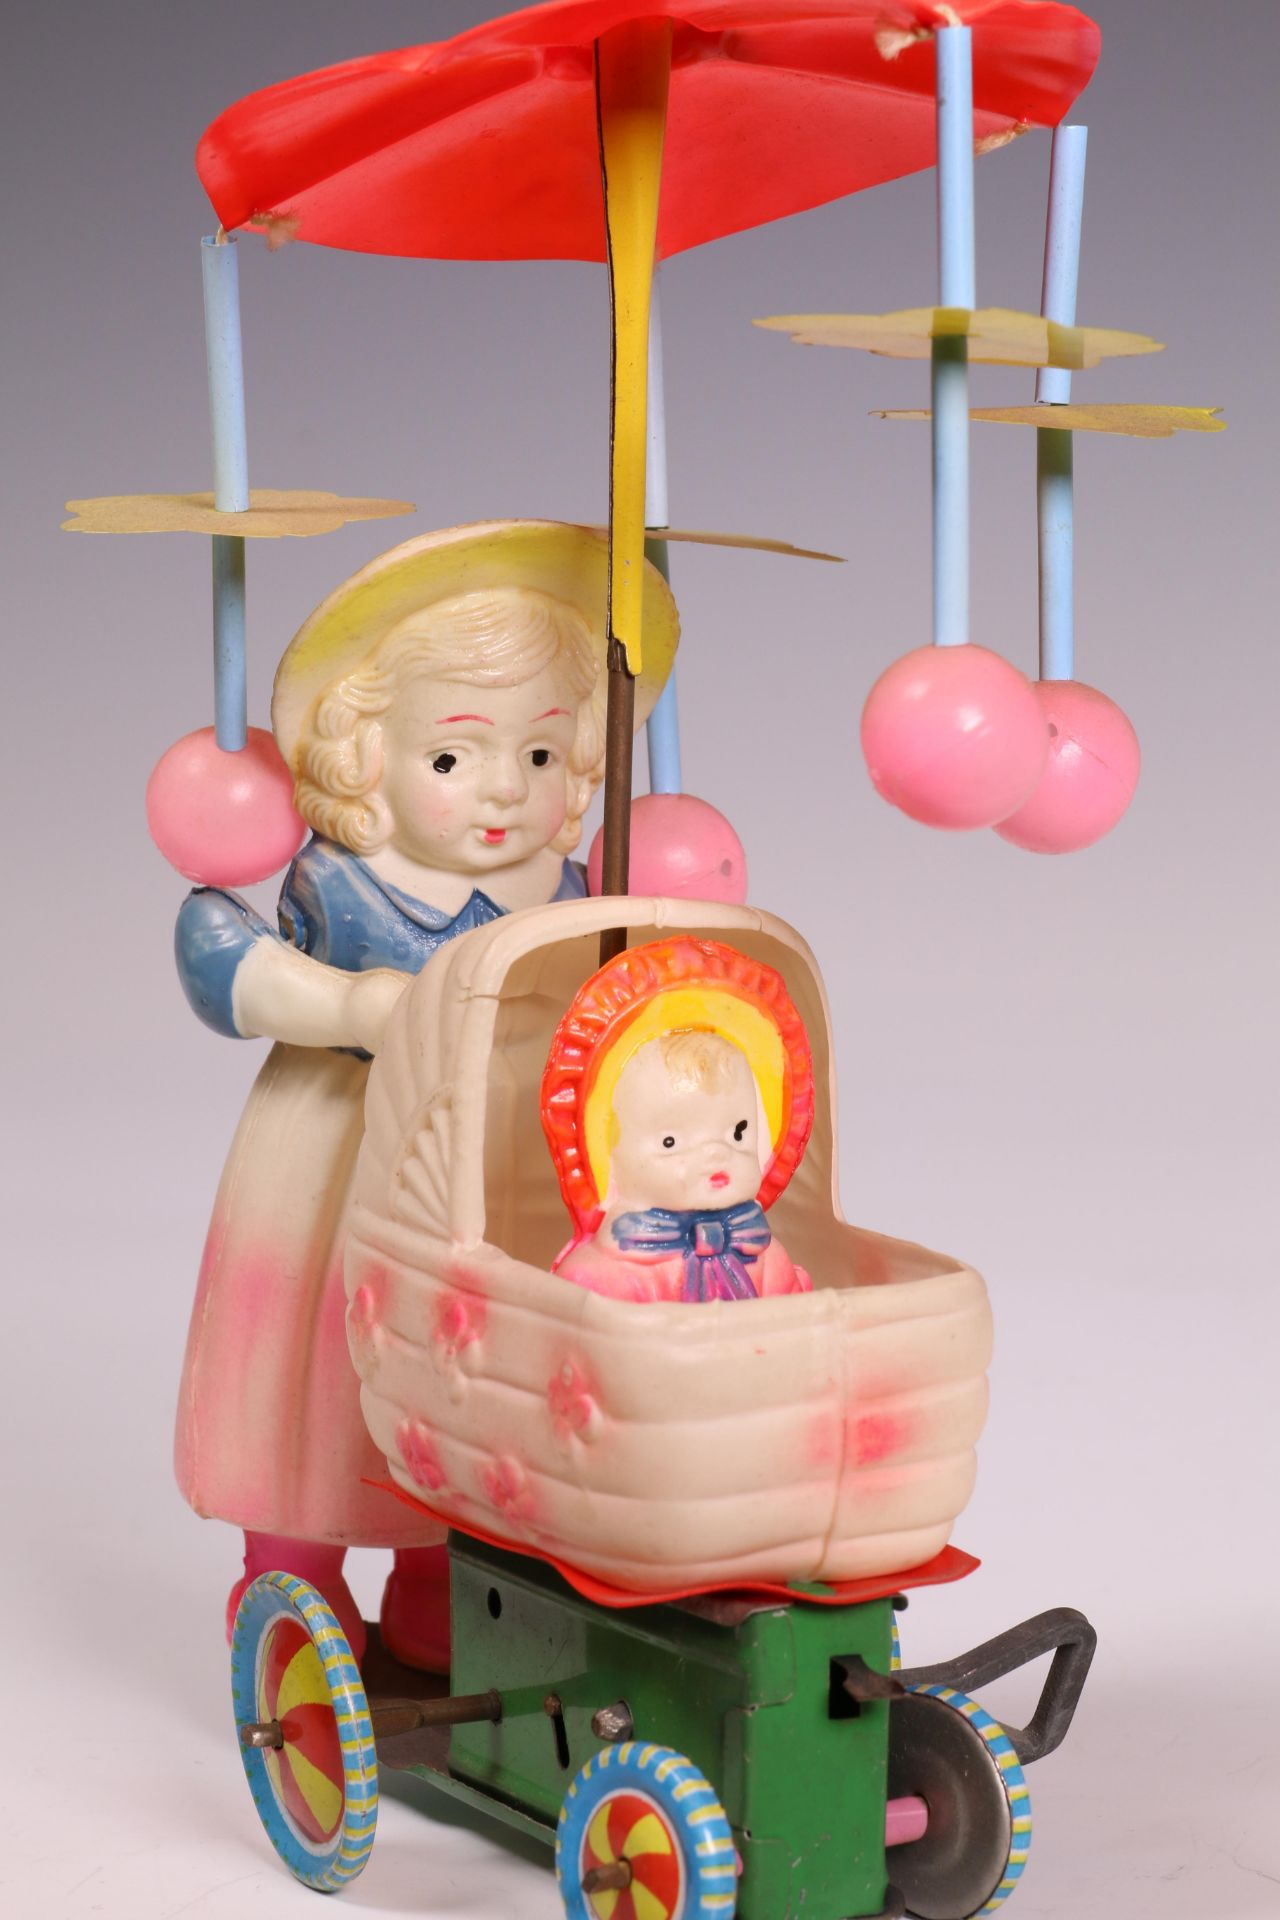 Japan, vier stuks celluloid speelgoed, ca. 1940-1950. - Image 16 of 19